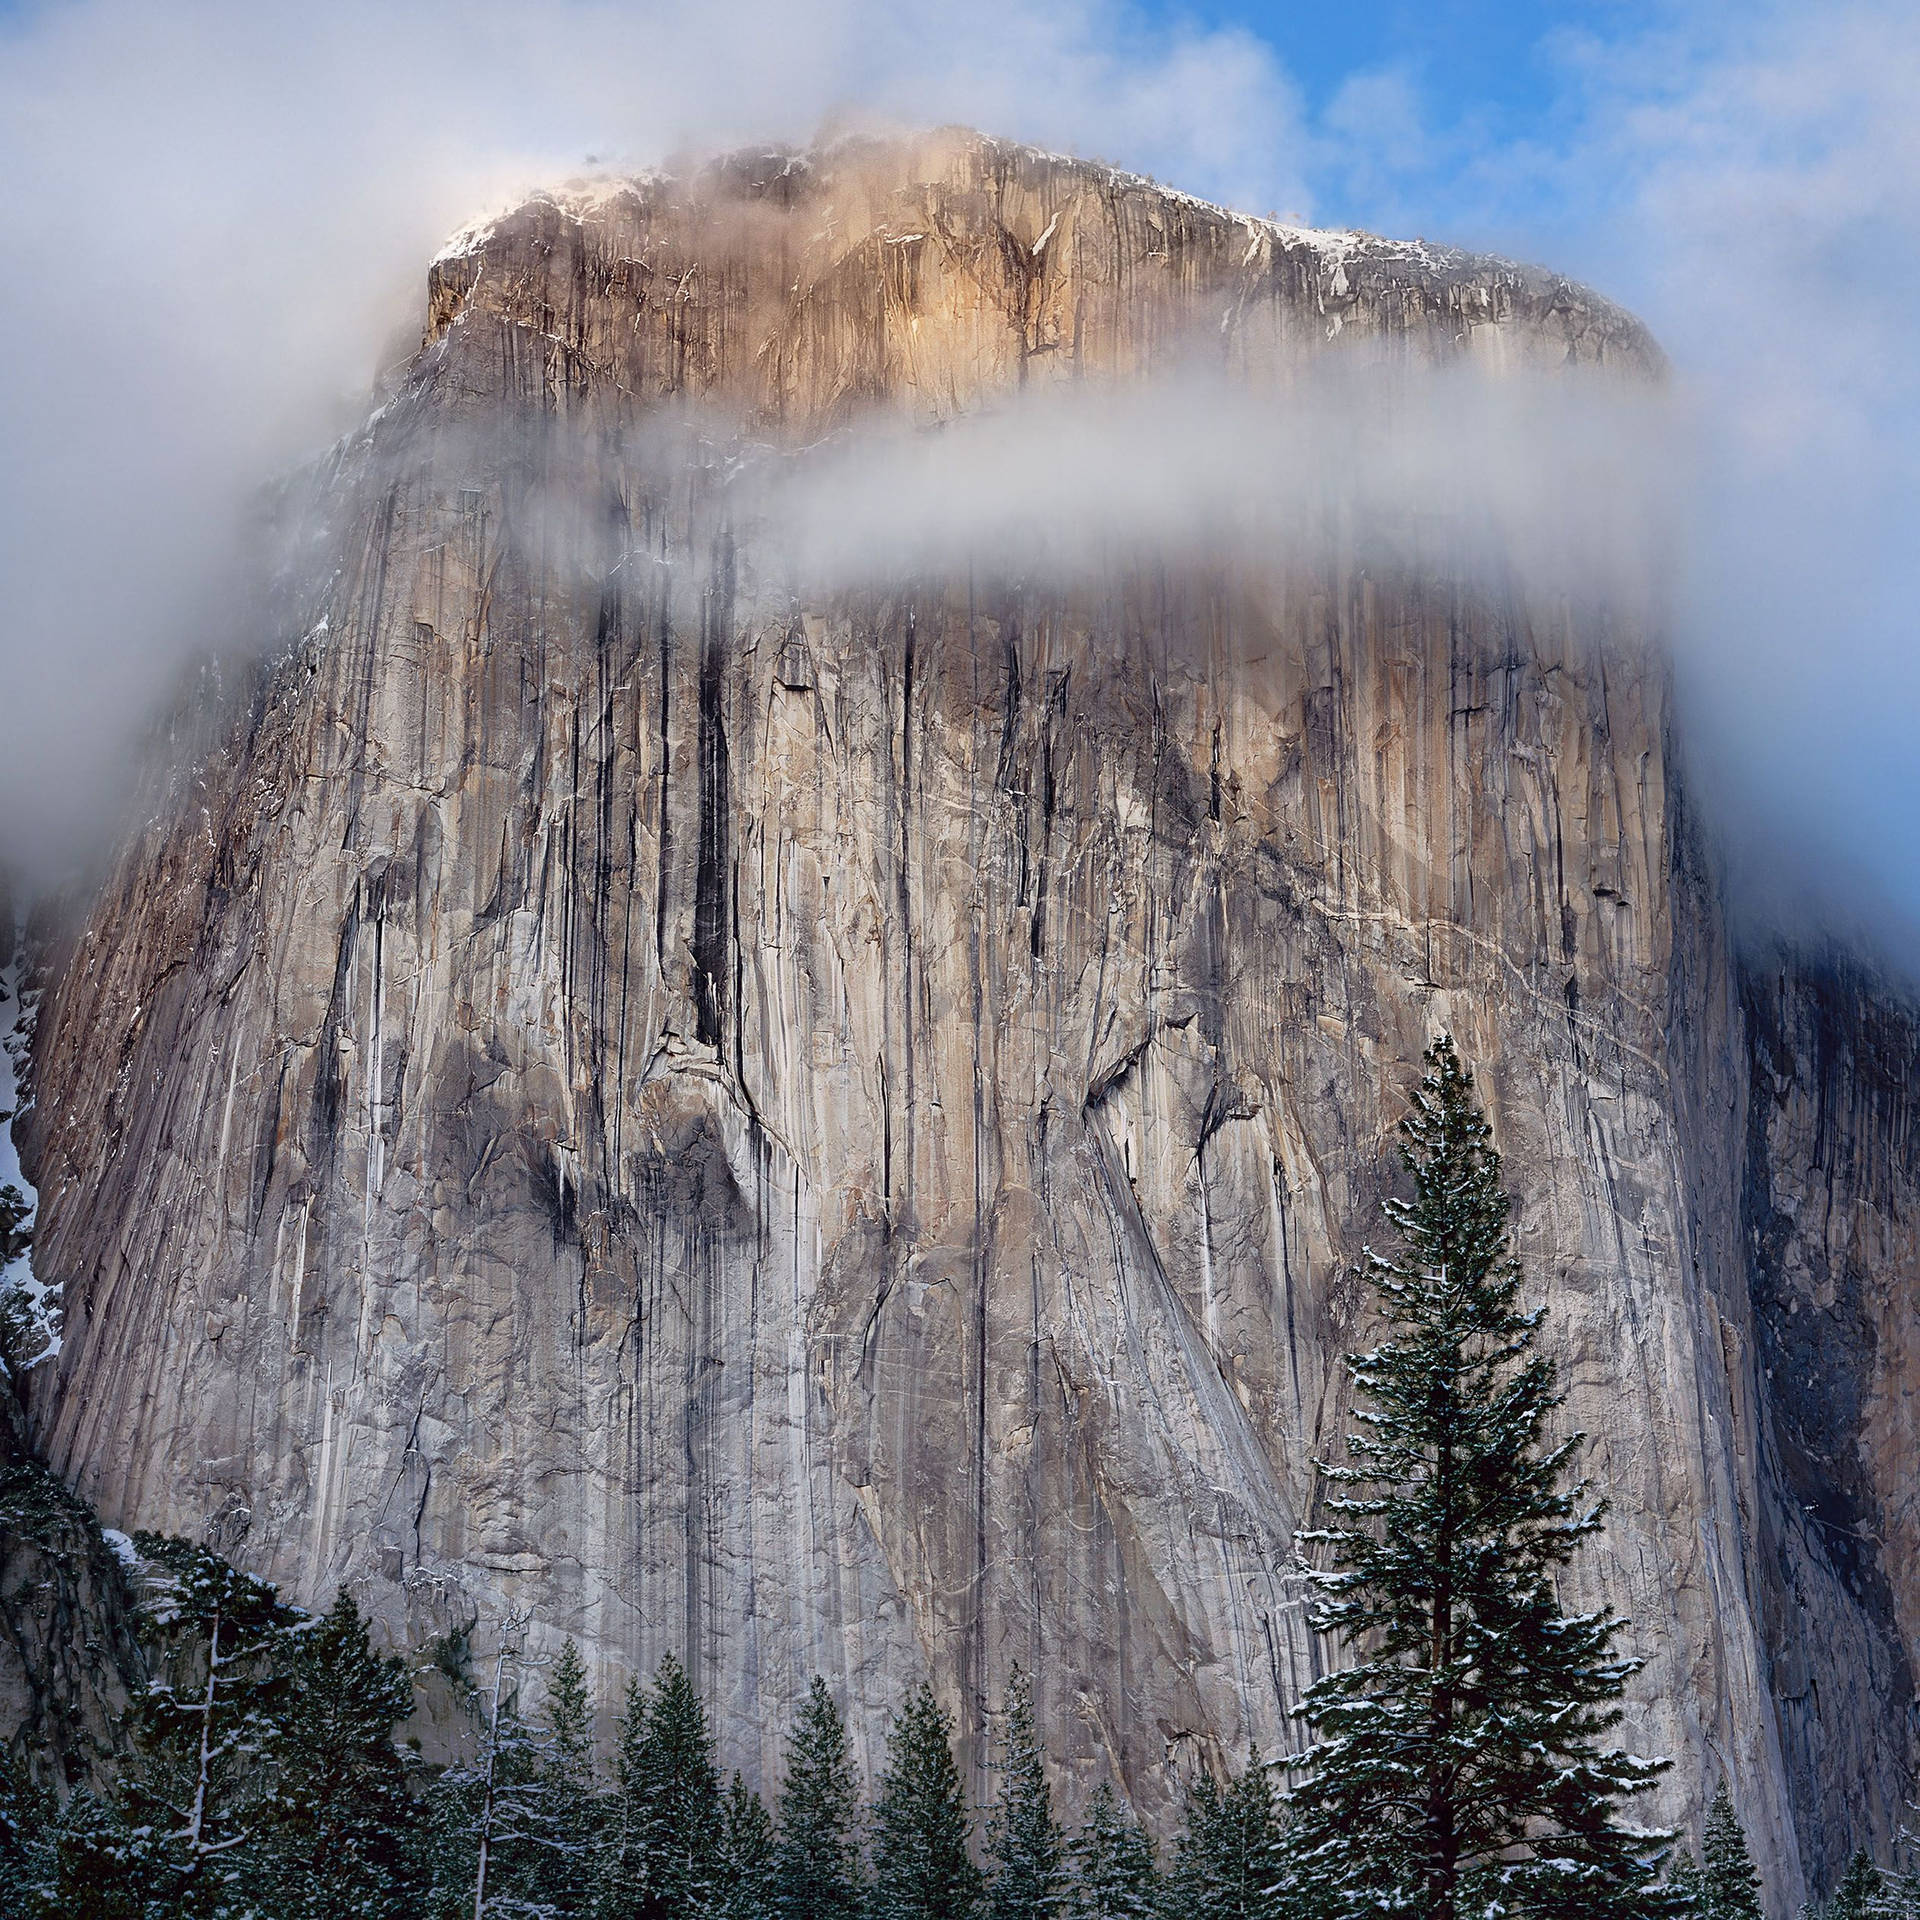 Iphoneanvändare Kan Njuta Av Skönheten I Yosemite National Park På Sin Bakgrundsbild. Wallpaper